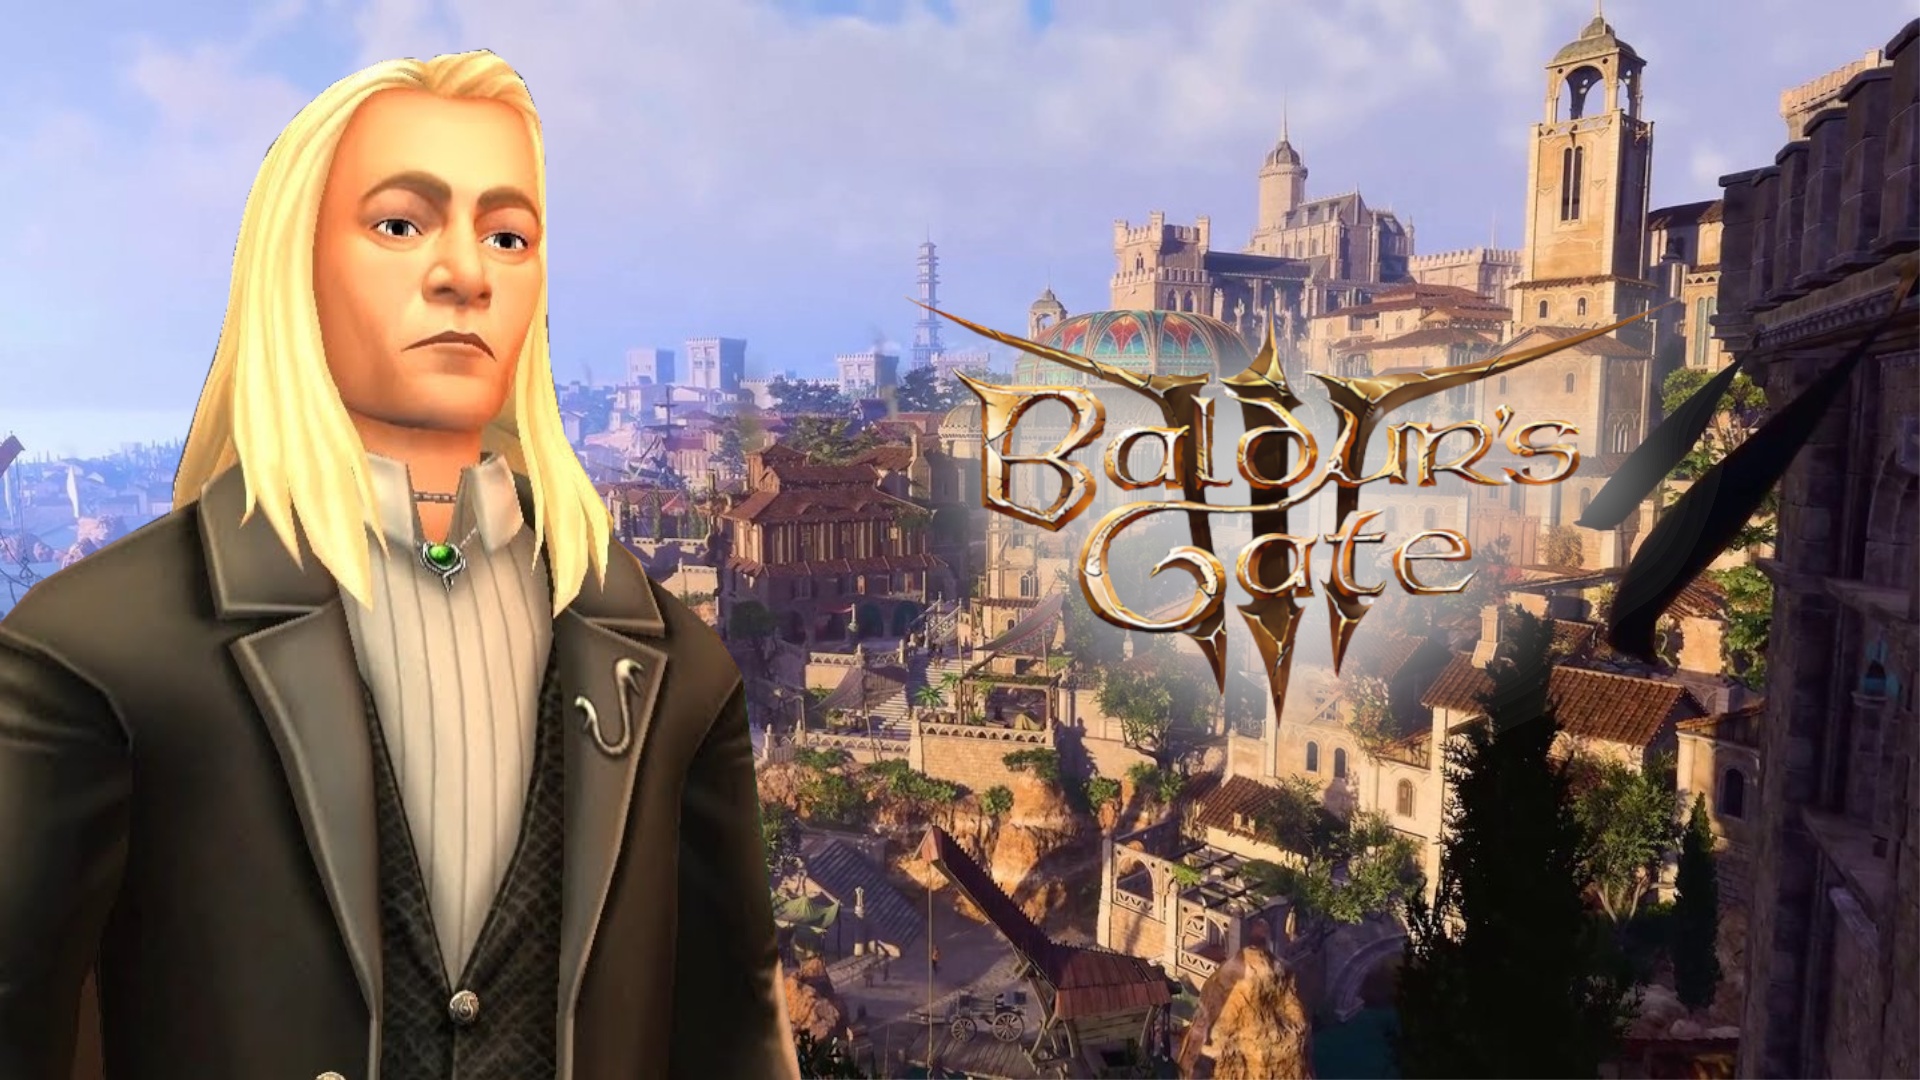 #Baldur’s Gate 3 rekrutiert einen Harry-Potter-Bösewicht als Sprecher